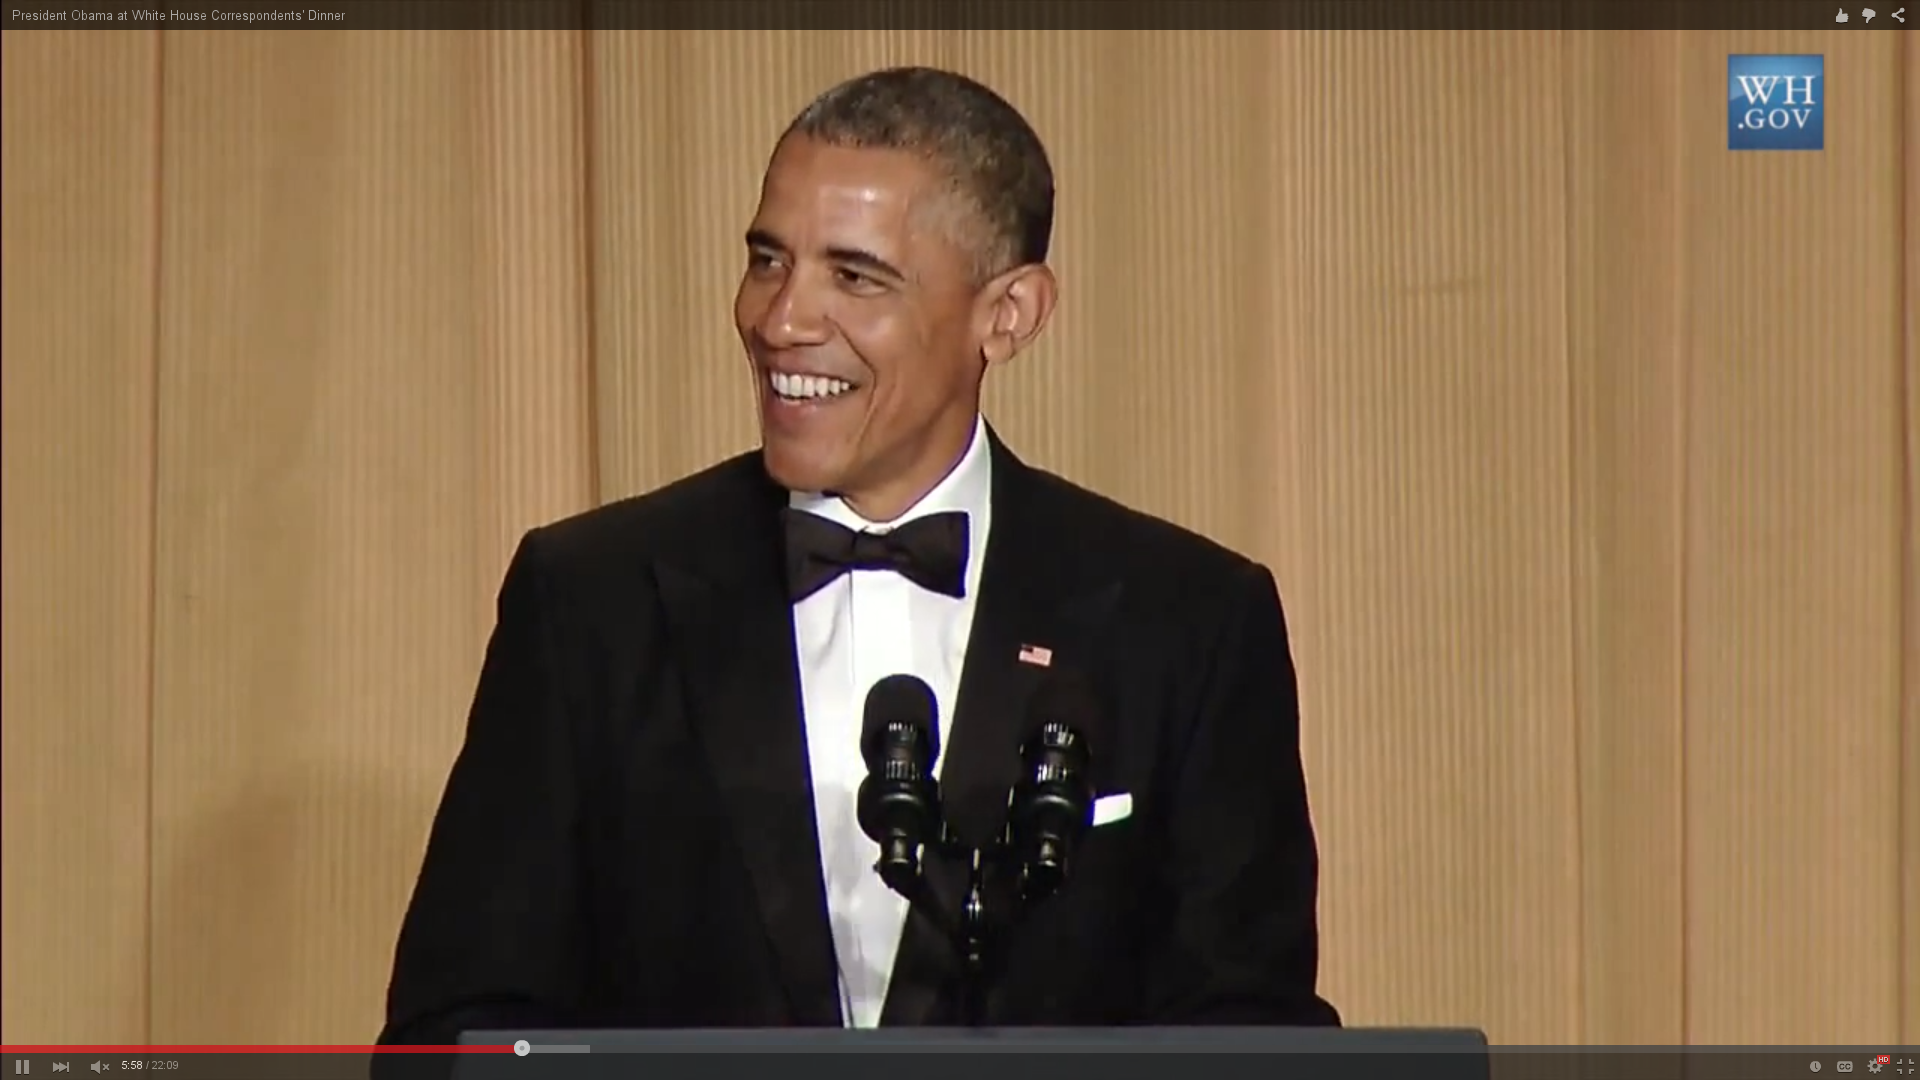 President Obama smiles at White House Correspondents' Dinner